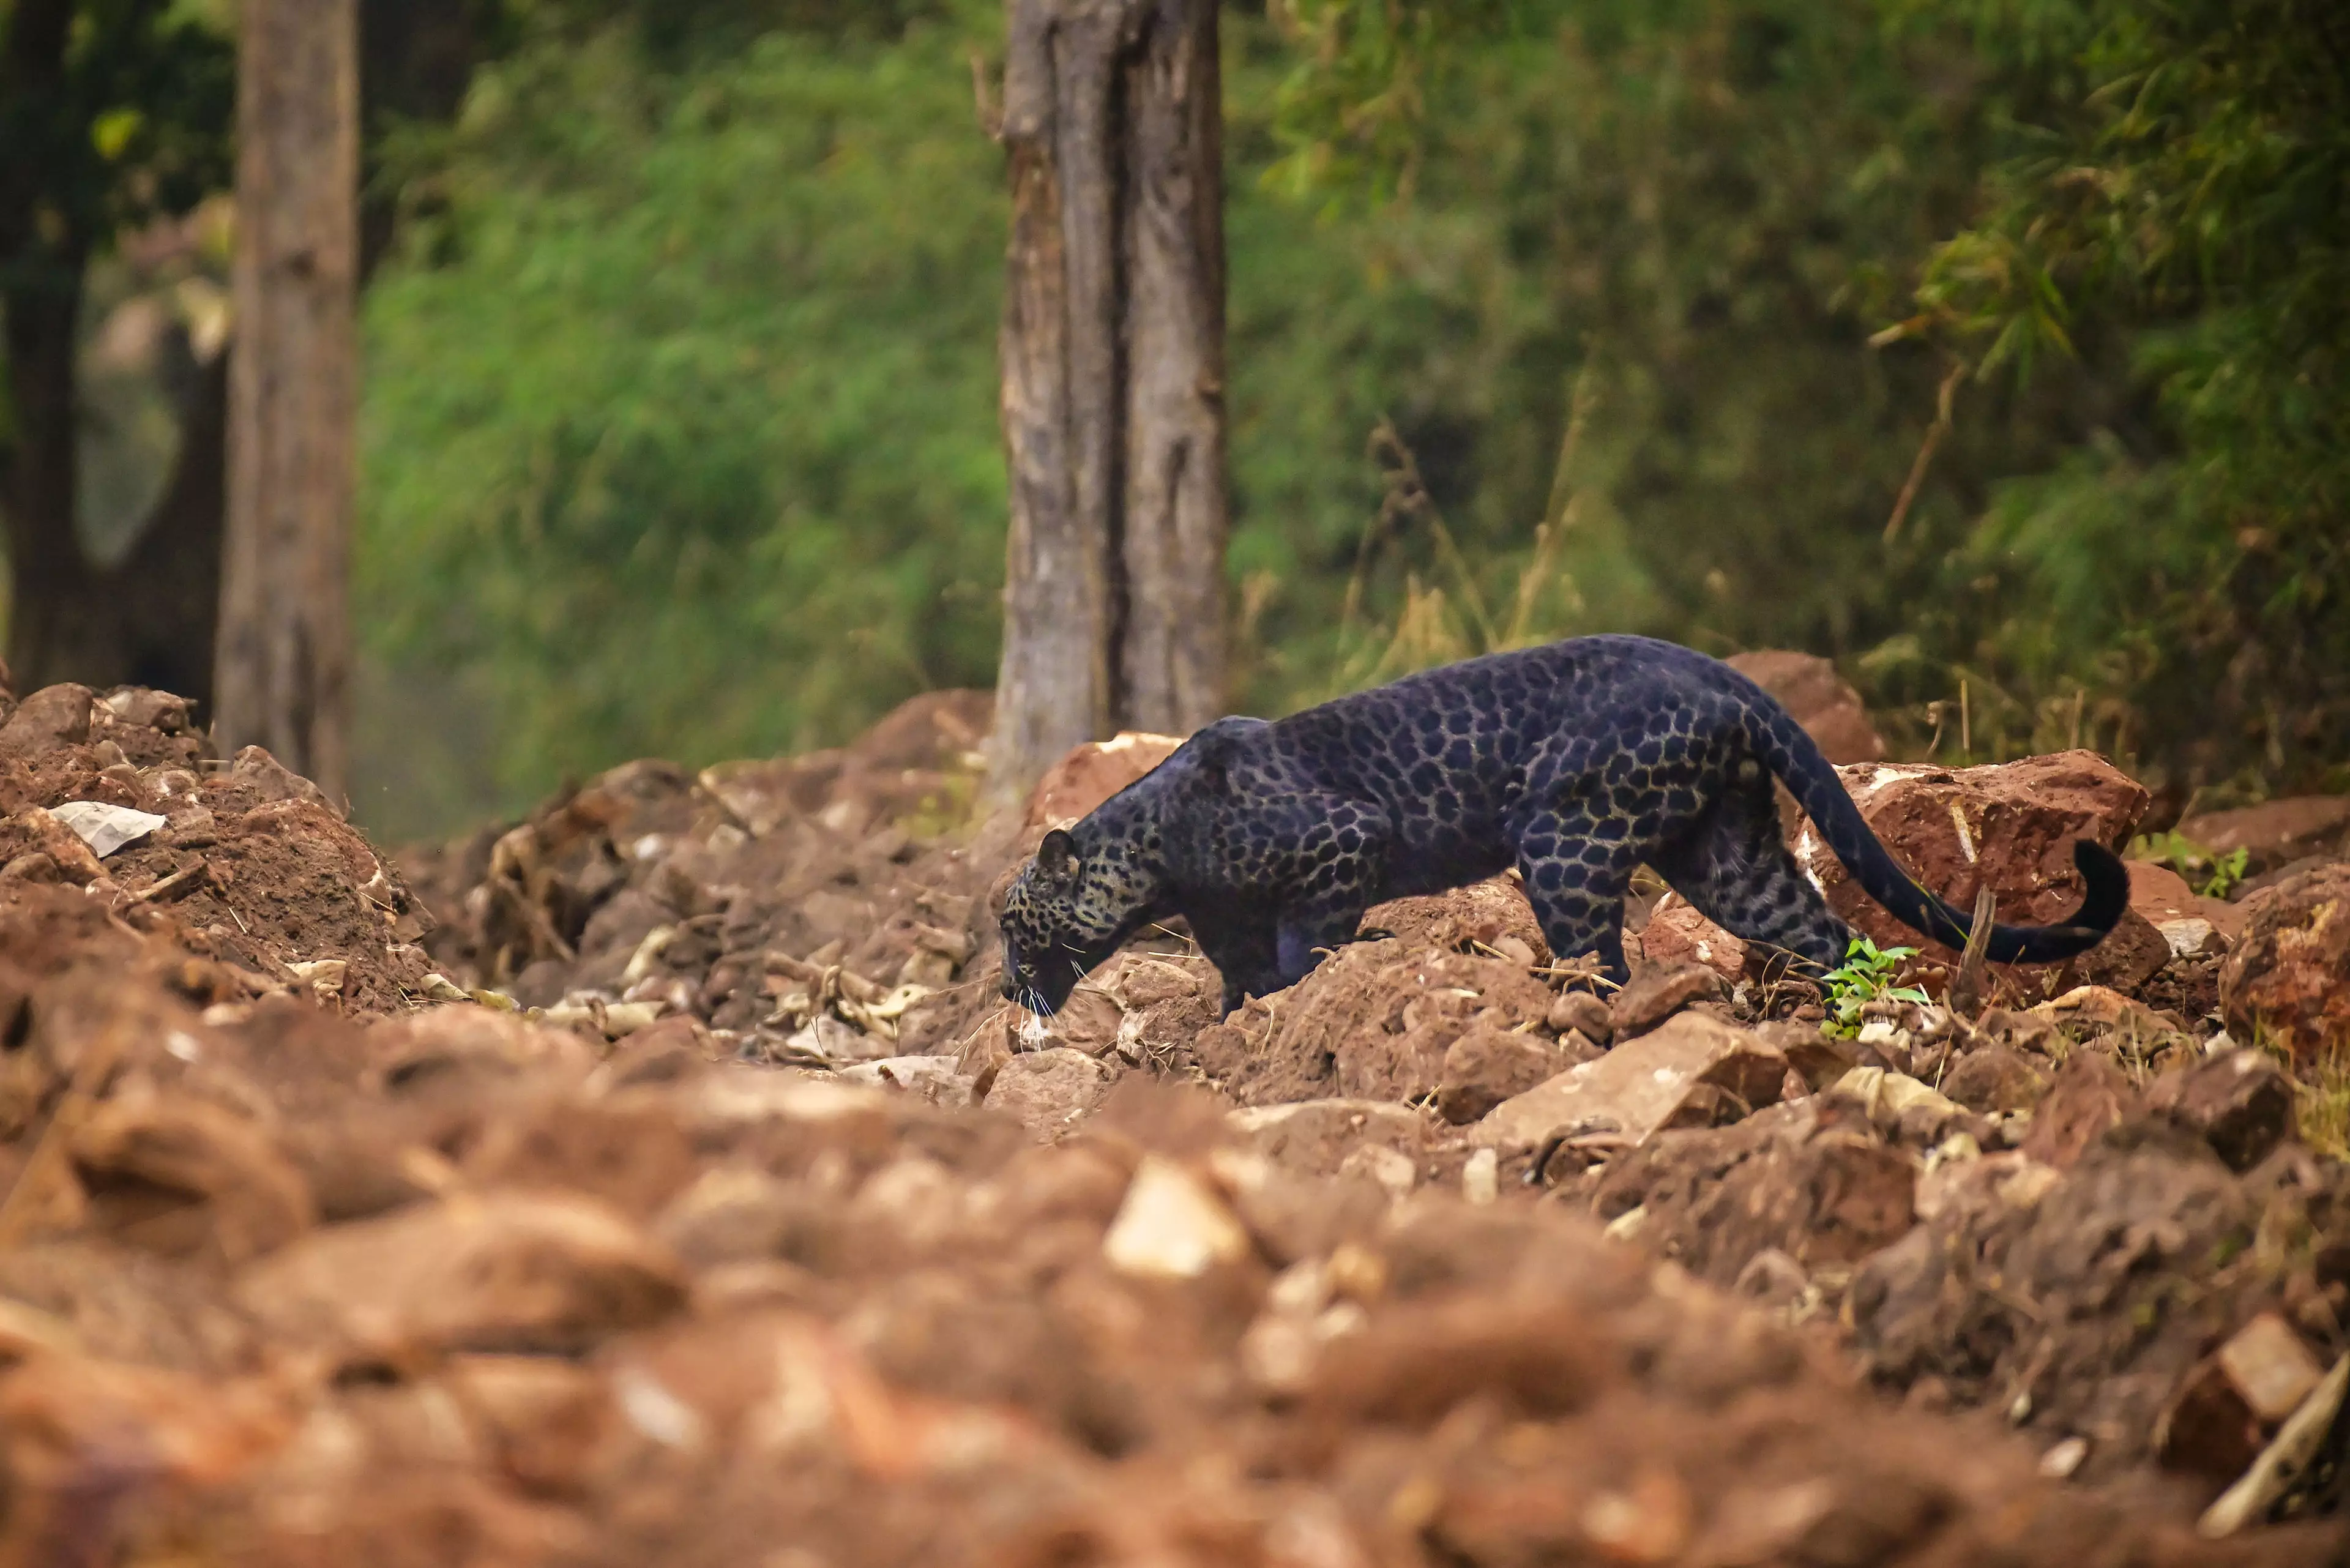 Black Leopard Safari in India - Tiger Safari in India